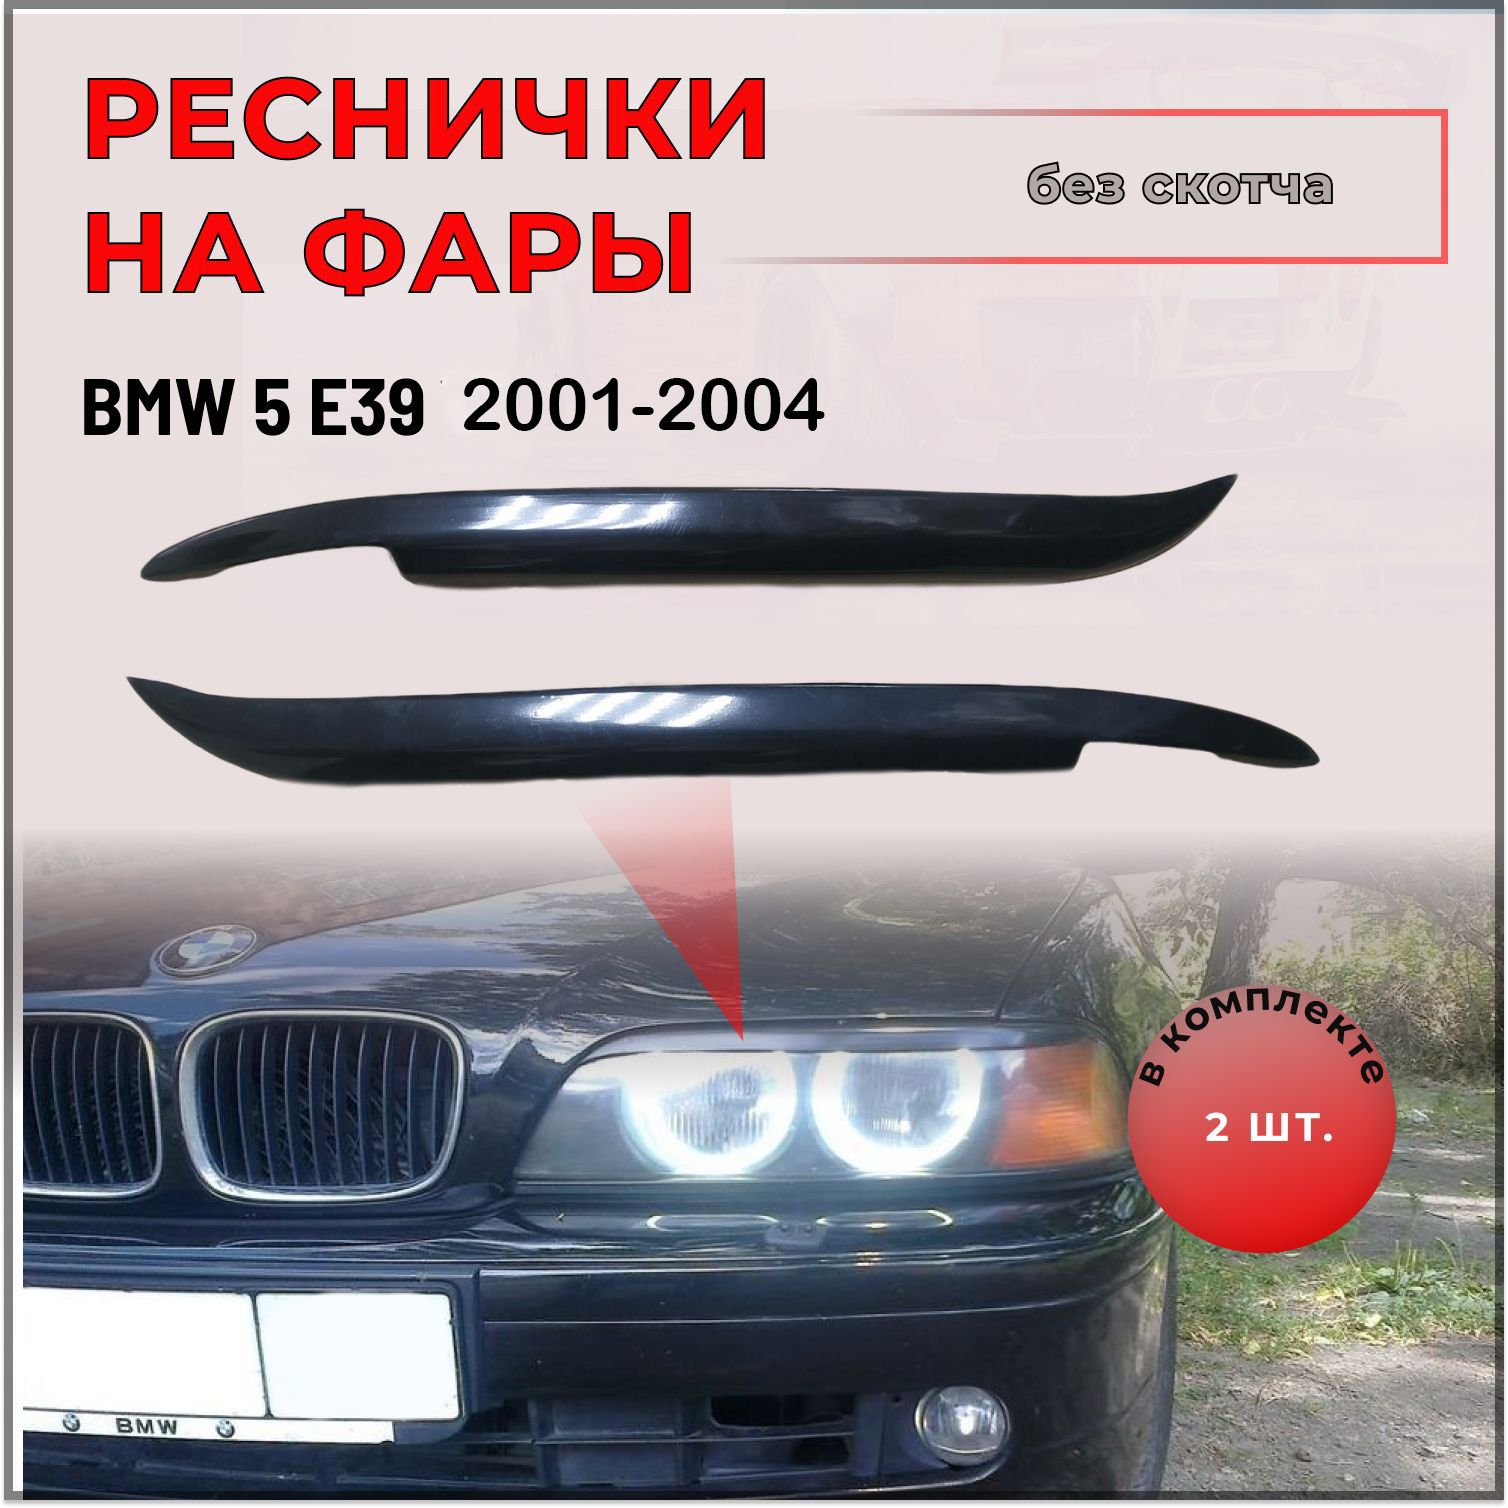 Реснички на фары BMW Е39 верхние